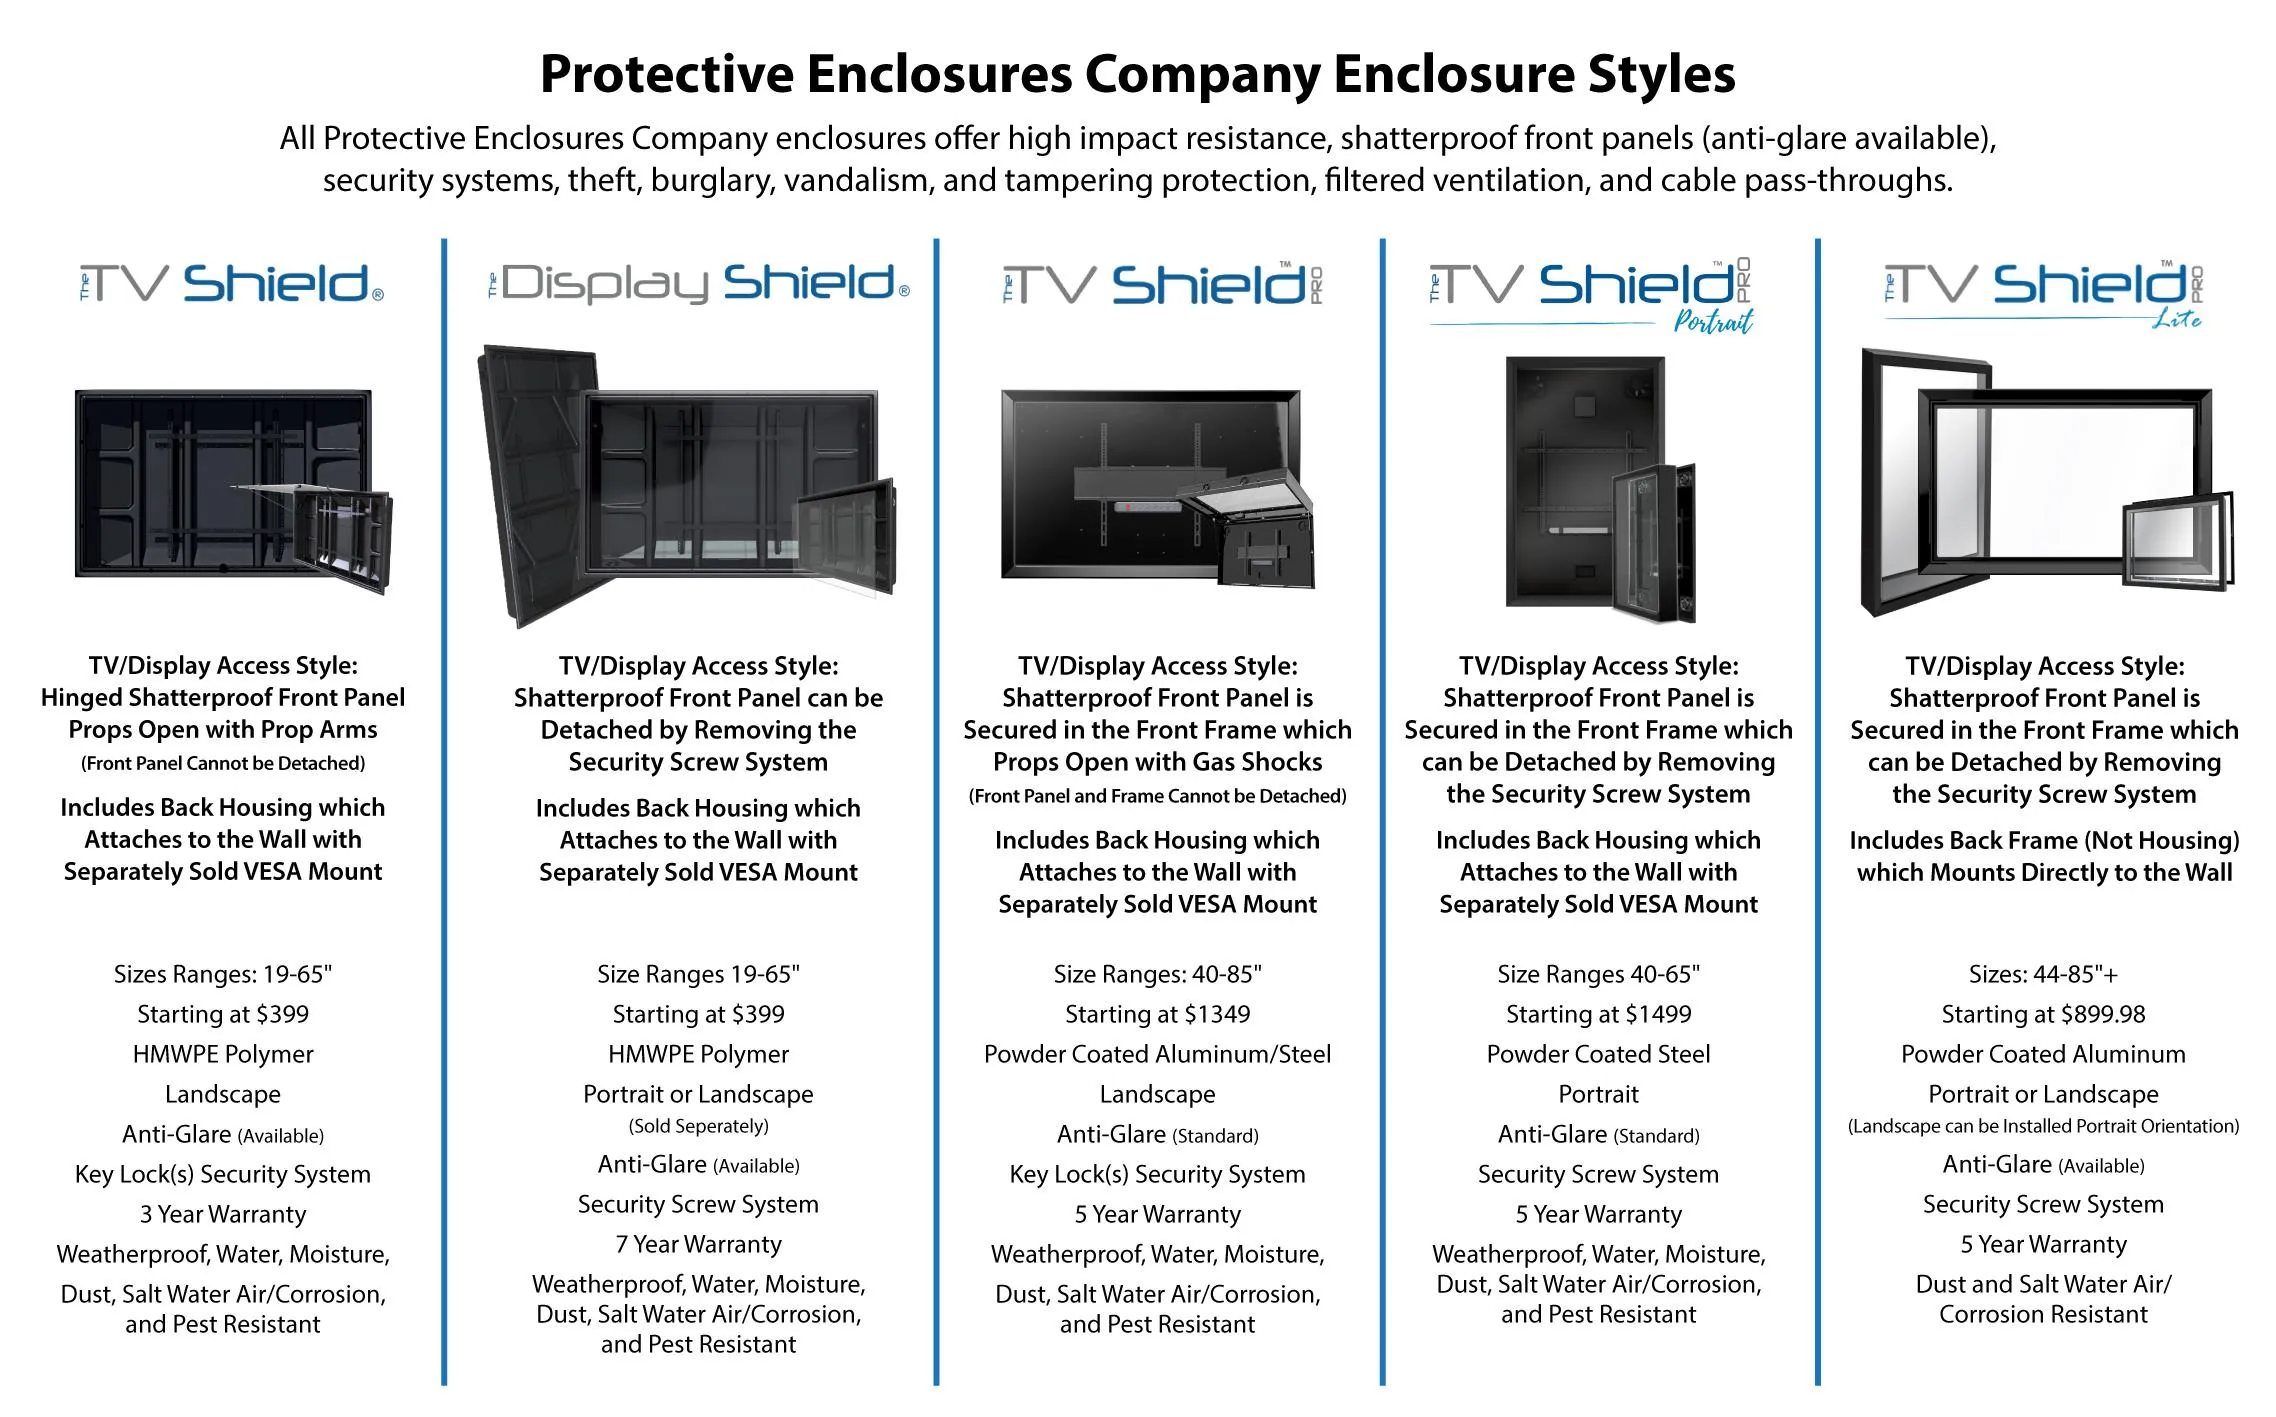 Comparing The TV Shield, The Display Shield, The TV Shield Pro,The TV Shield Pro portrait and The TV Shield Pro lite